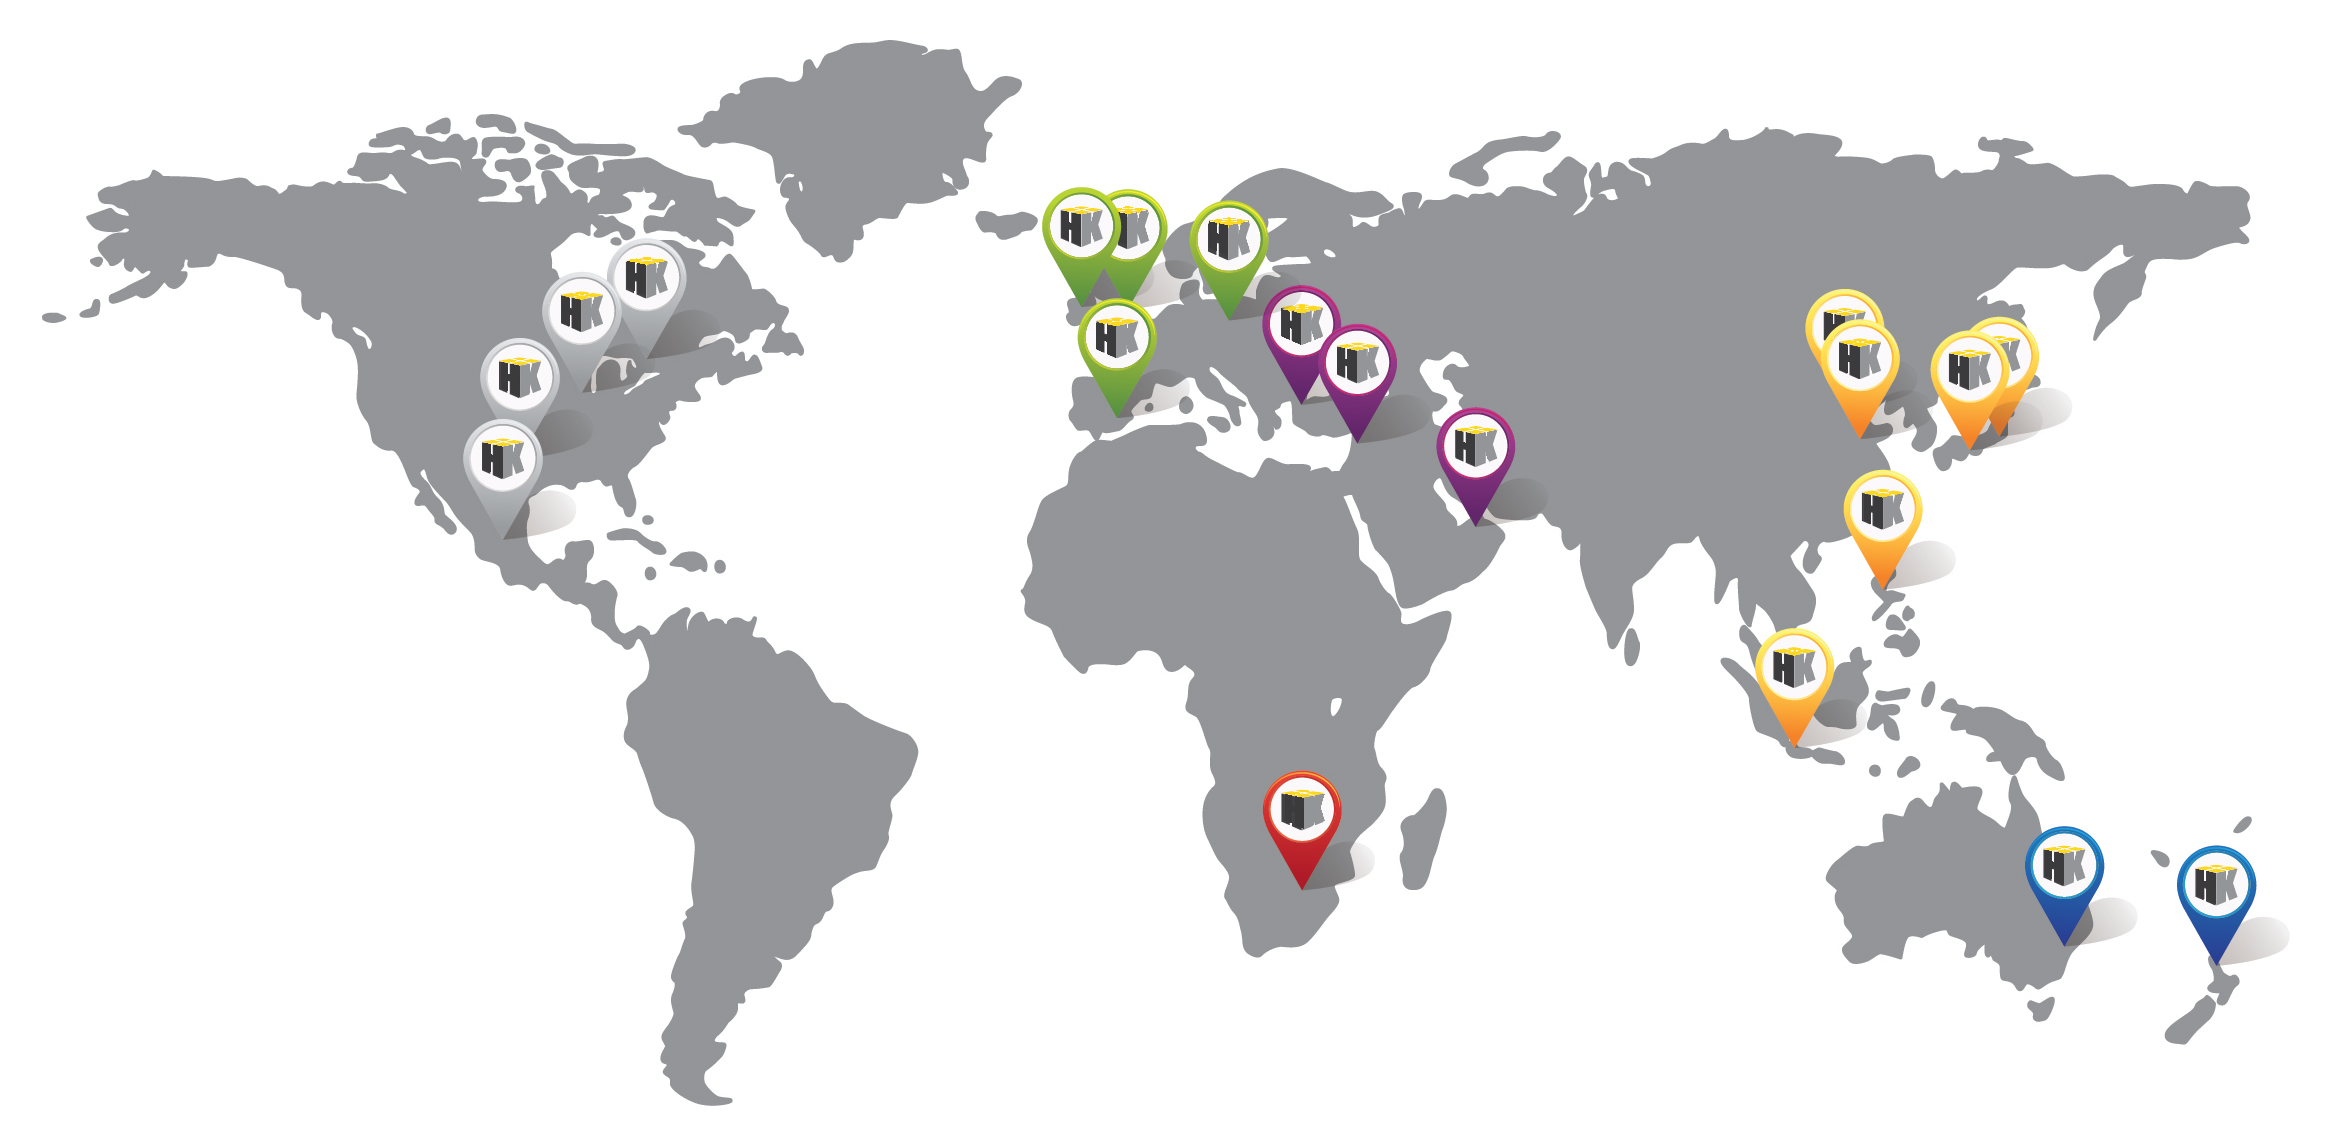 H+K locations around the world 